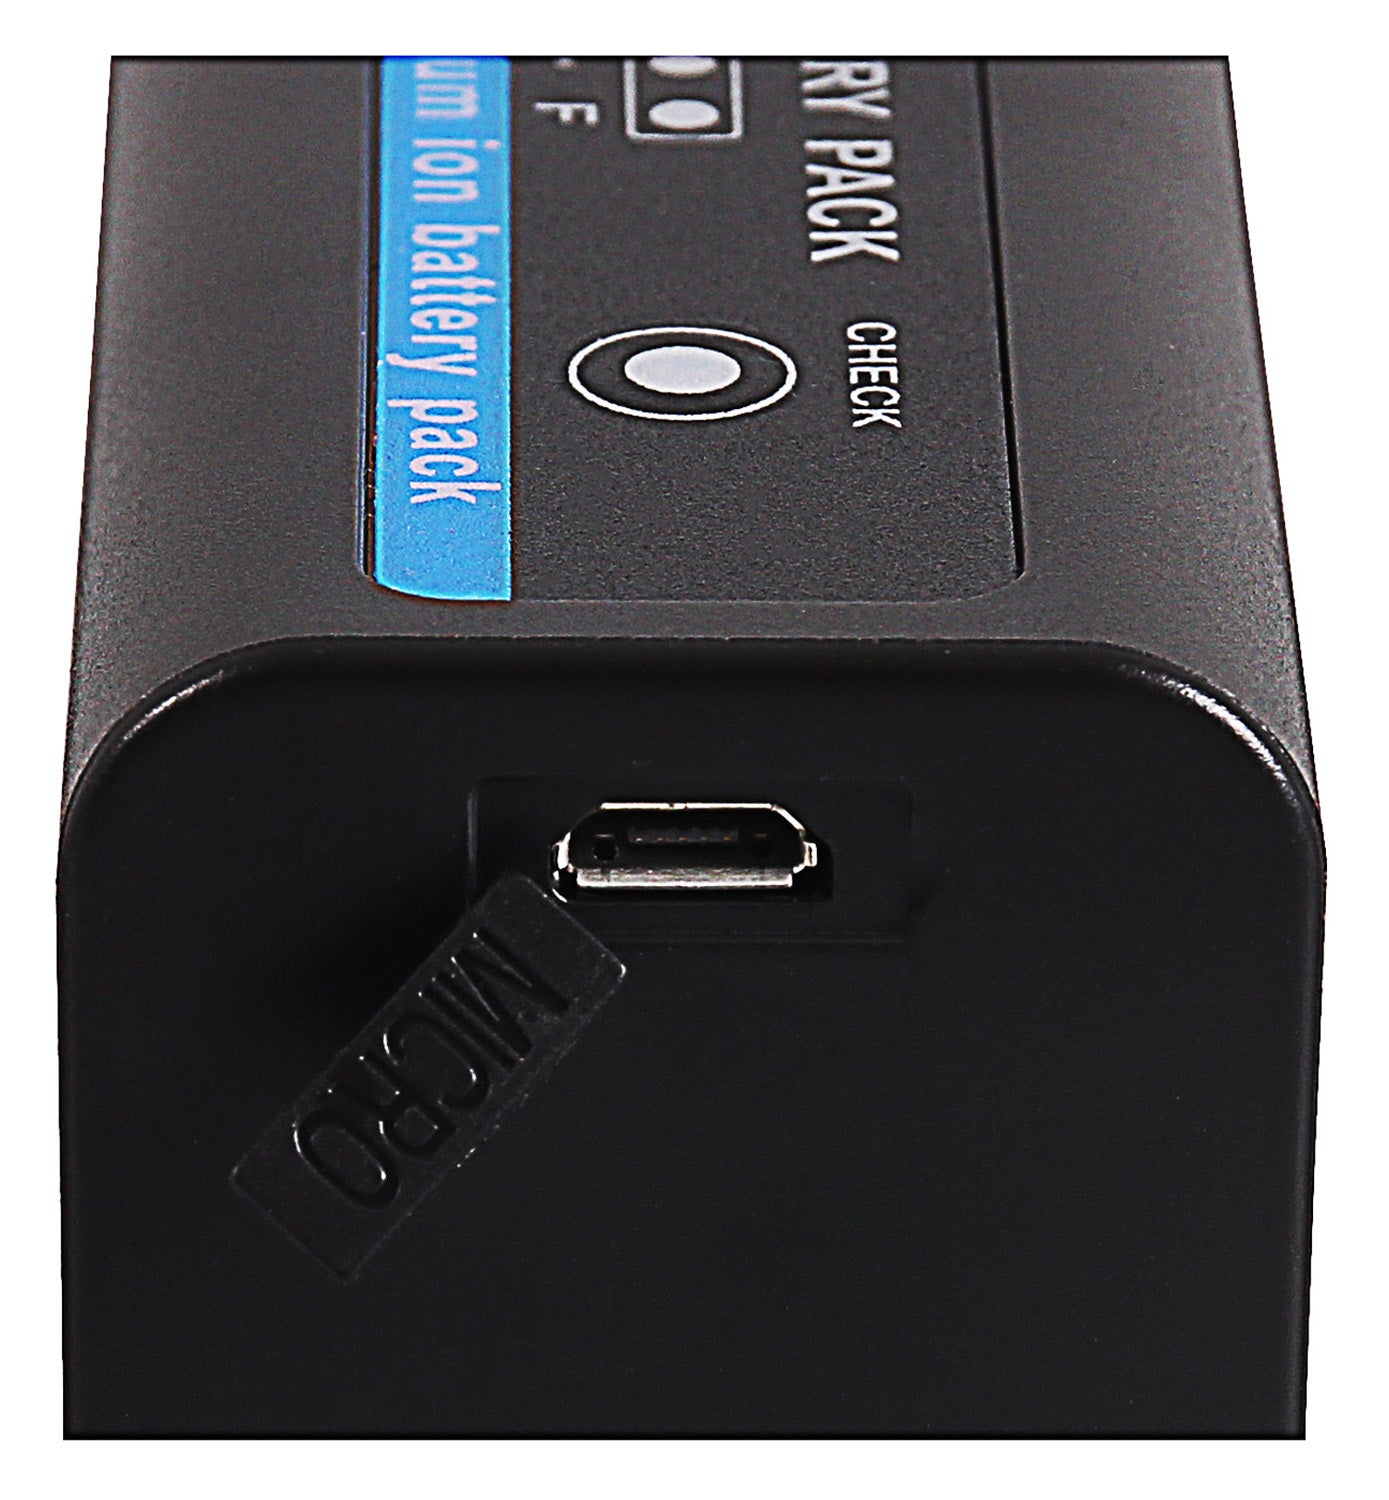 Patona Platinum Battery Sony NP-F970 Powerbank 5V/2A USB Output 10500MAH e Micro USB Input - Cine Sud è da 47 anni sul mercato! 1041035